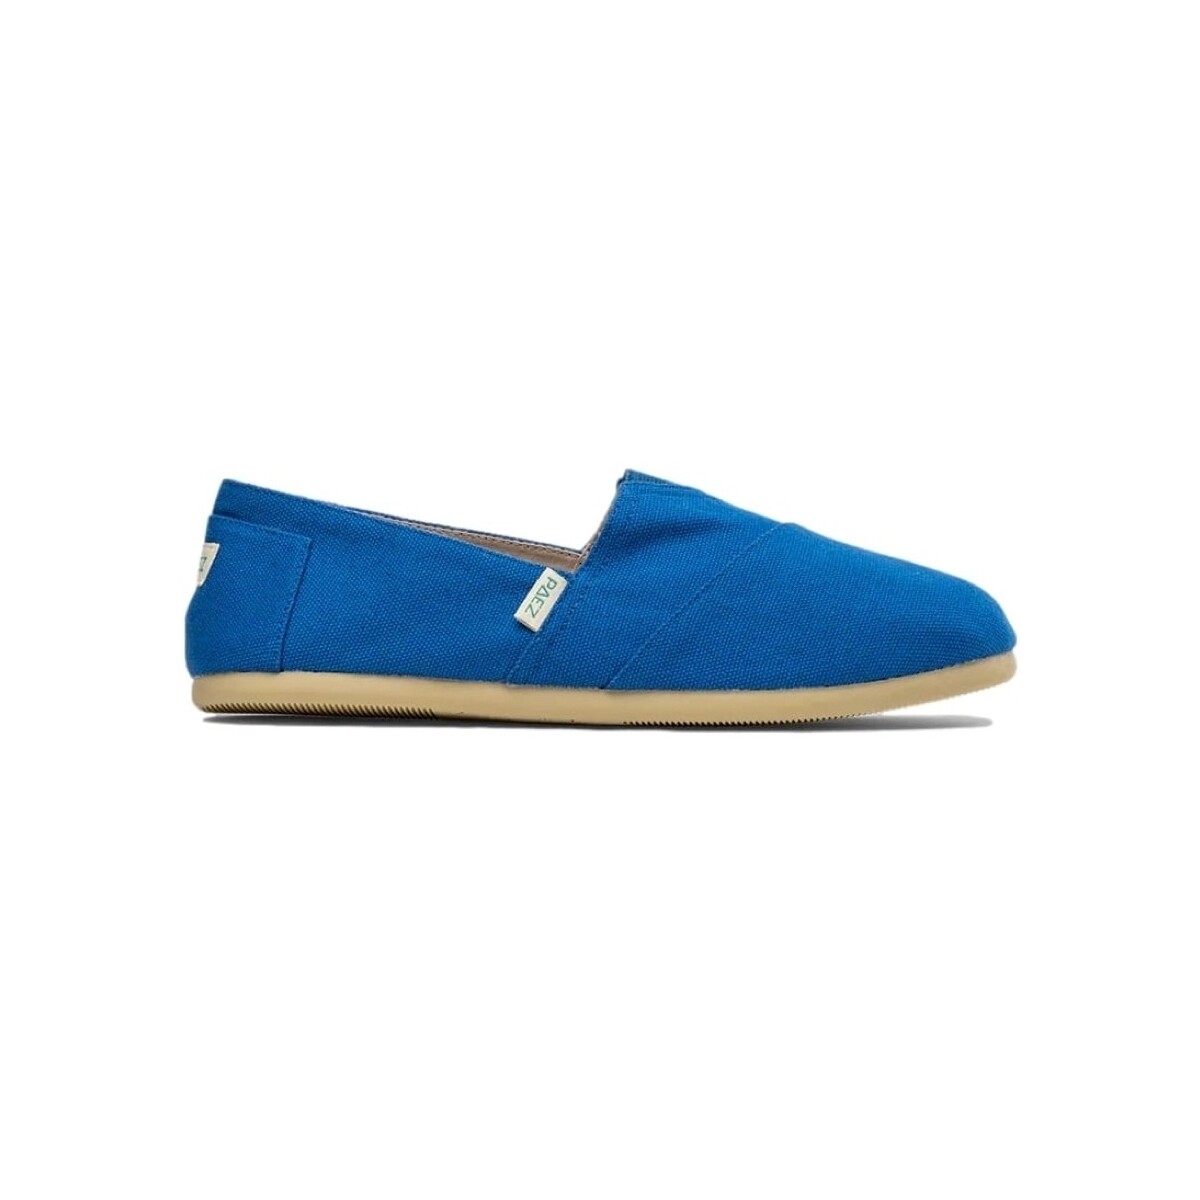 Schuhe Damen Leinen-Pantoletten mit gefloch Paez Gum Classic W - Combi Royal Blue Blau